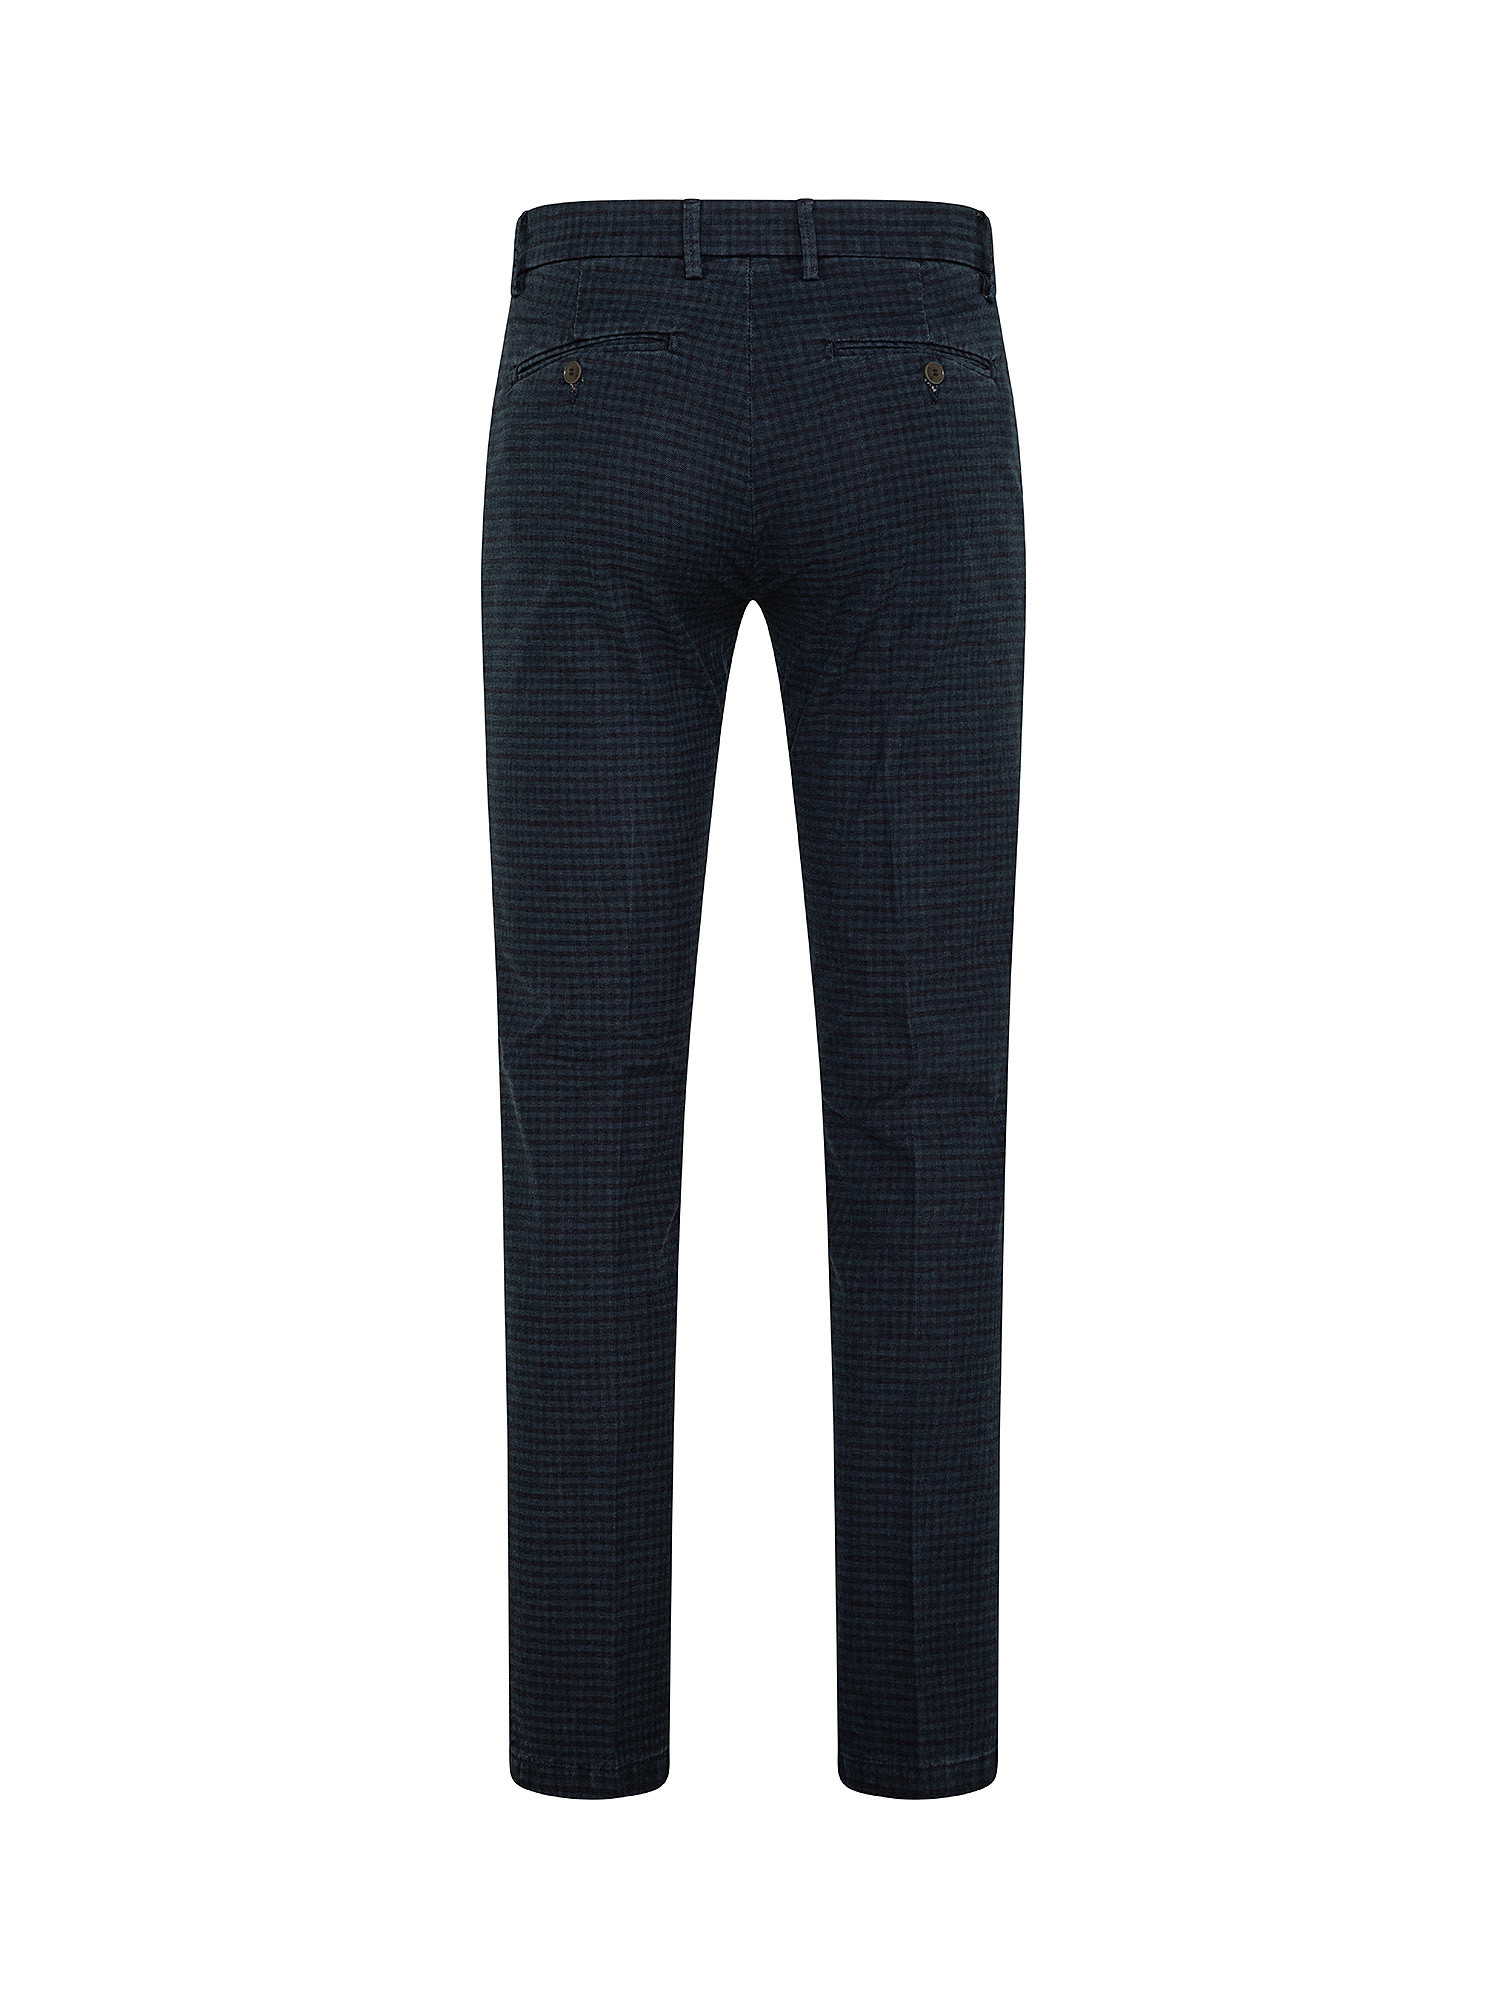 Chino pants, Blue, large image number 1